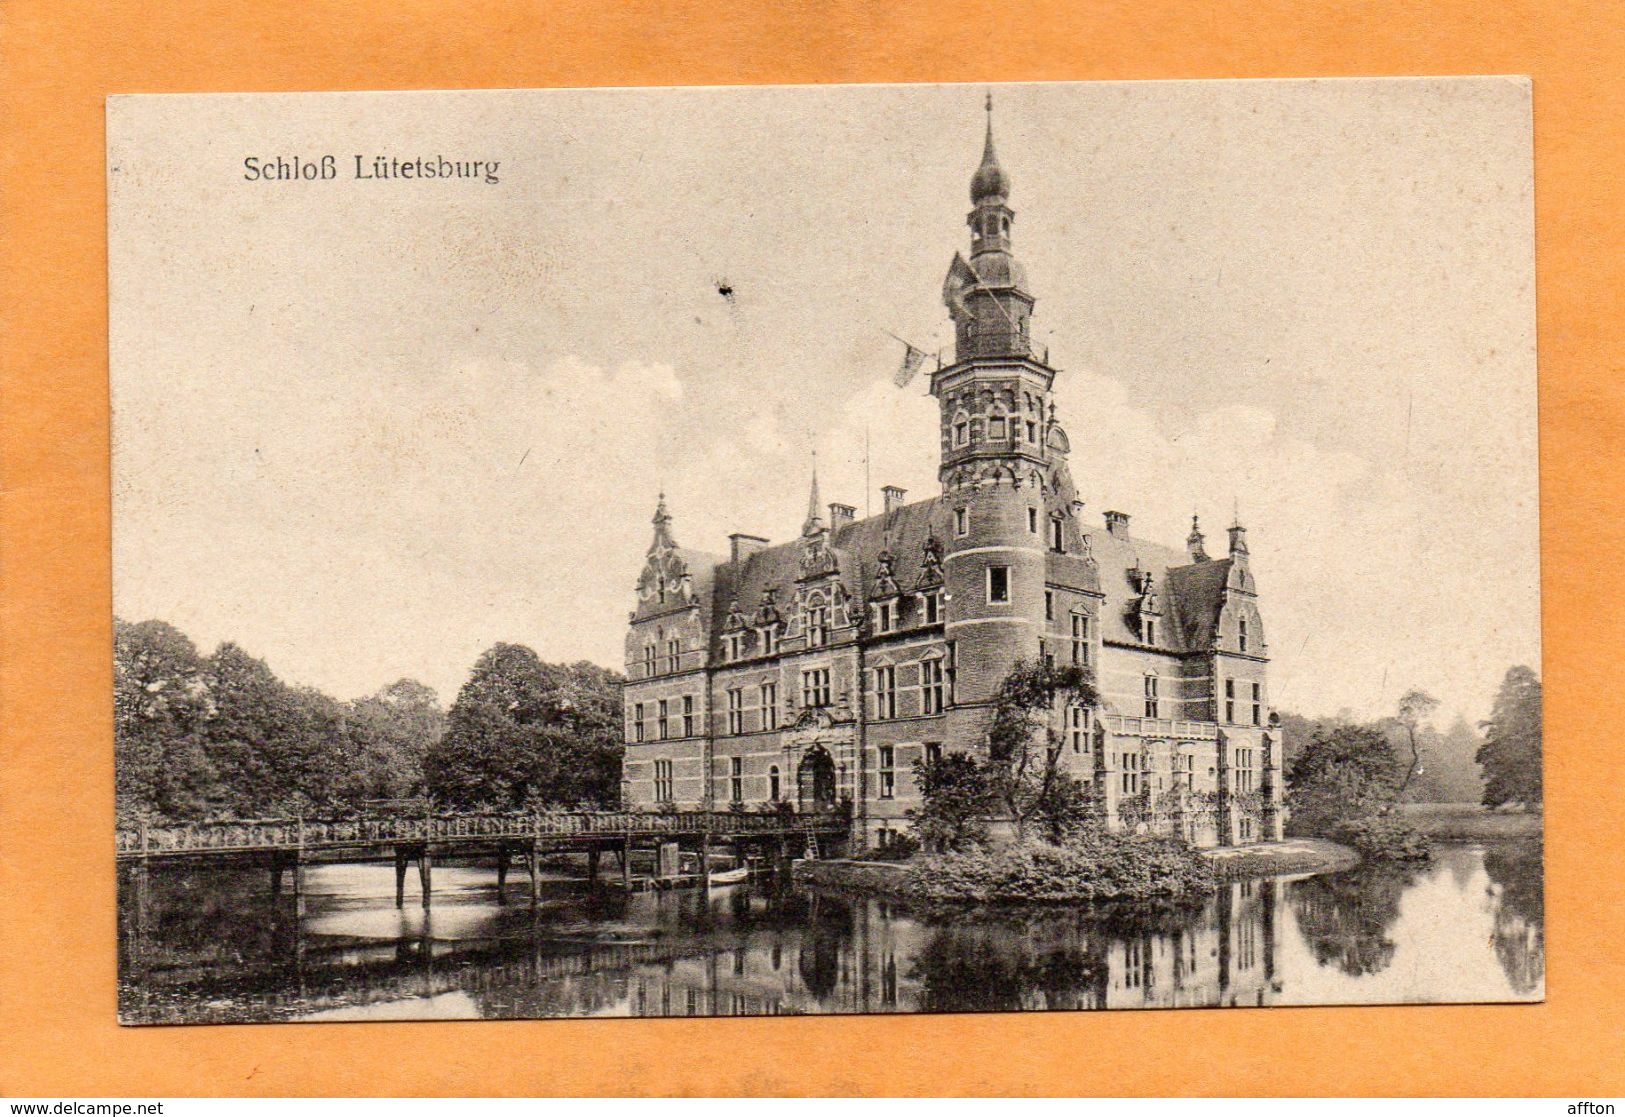 Lutetsburg Germany 1908 Postcard - Aurich